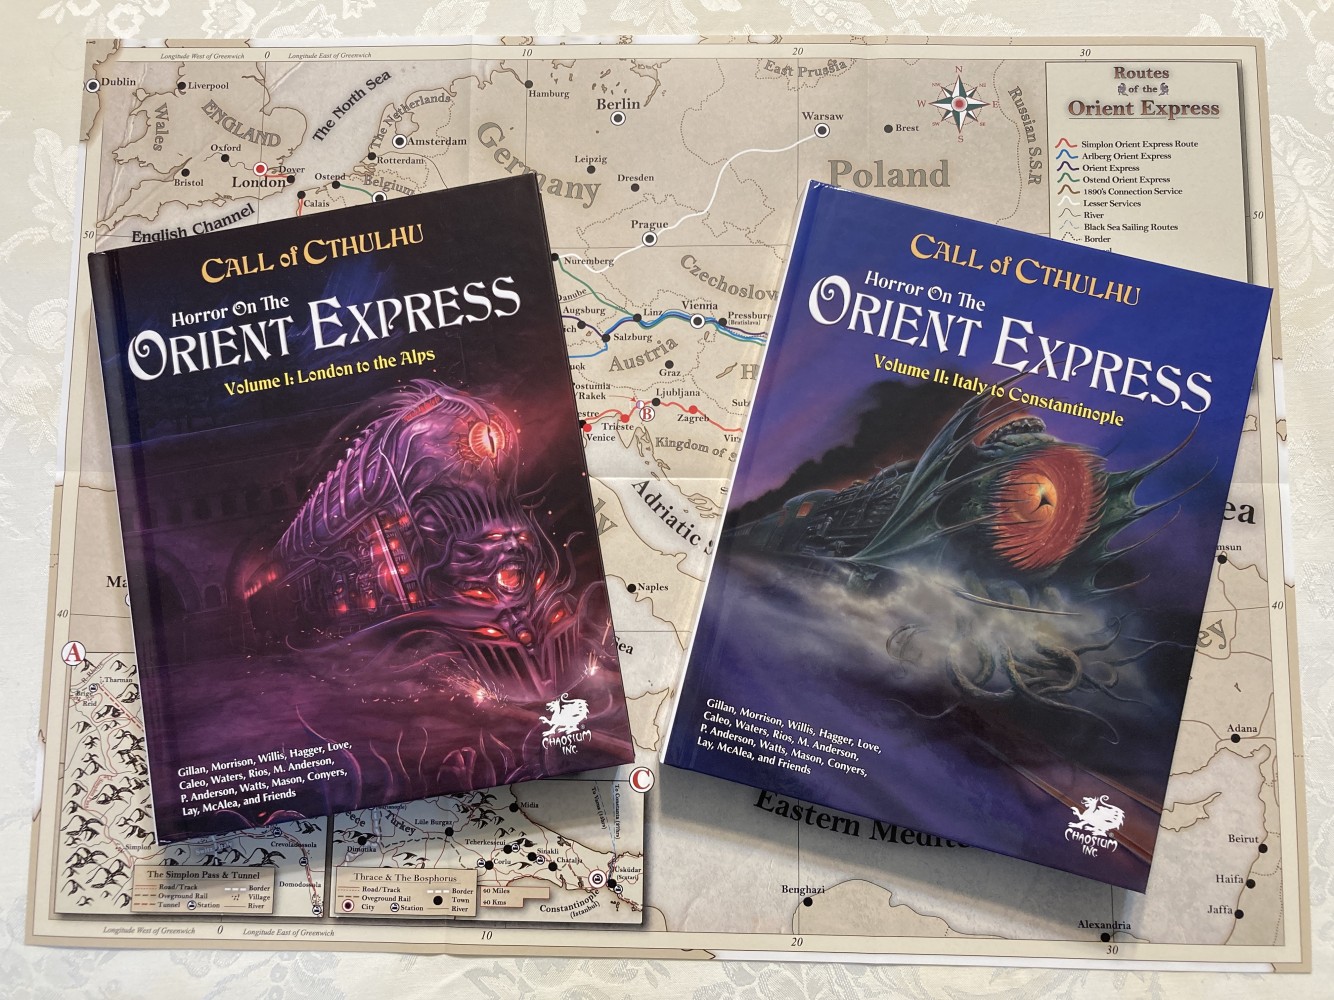 Orient Express tickets - Chaosium, Miskatonic Repository